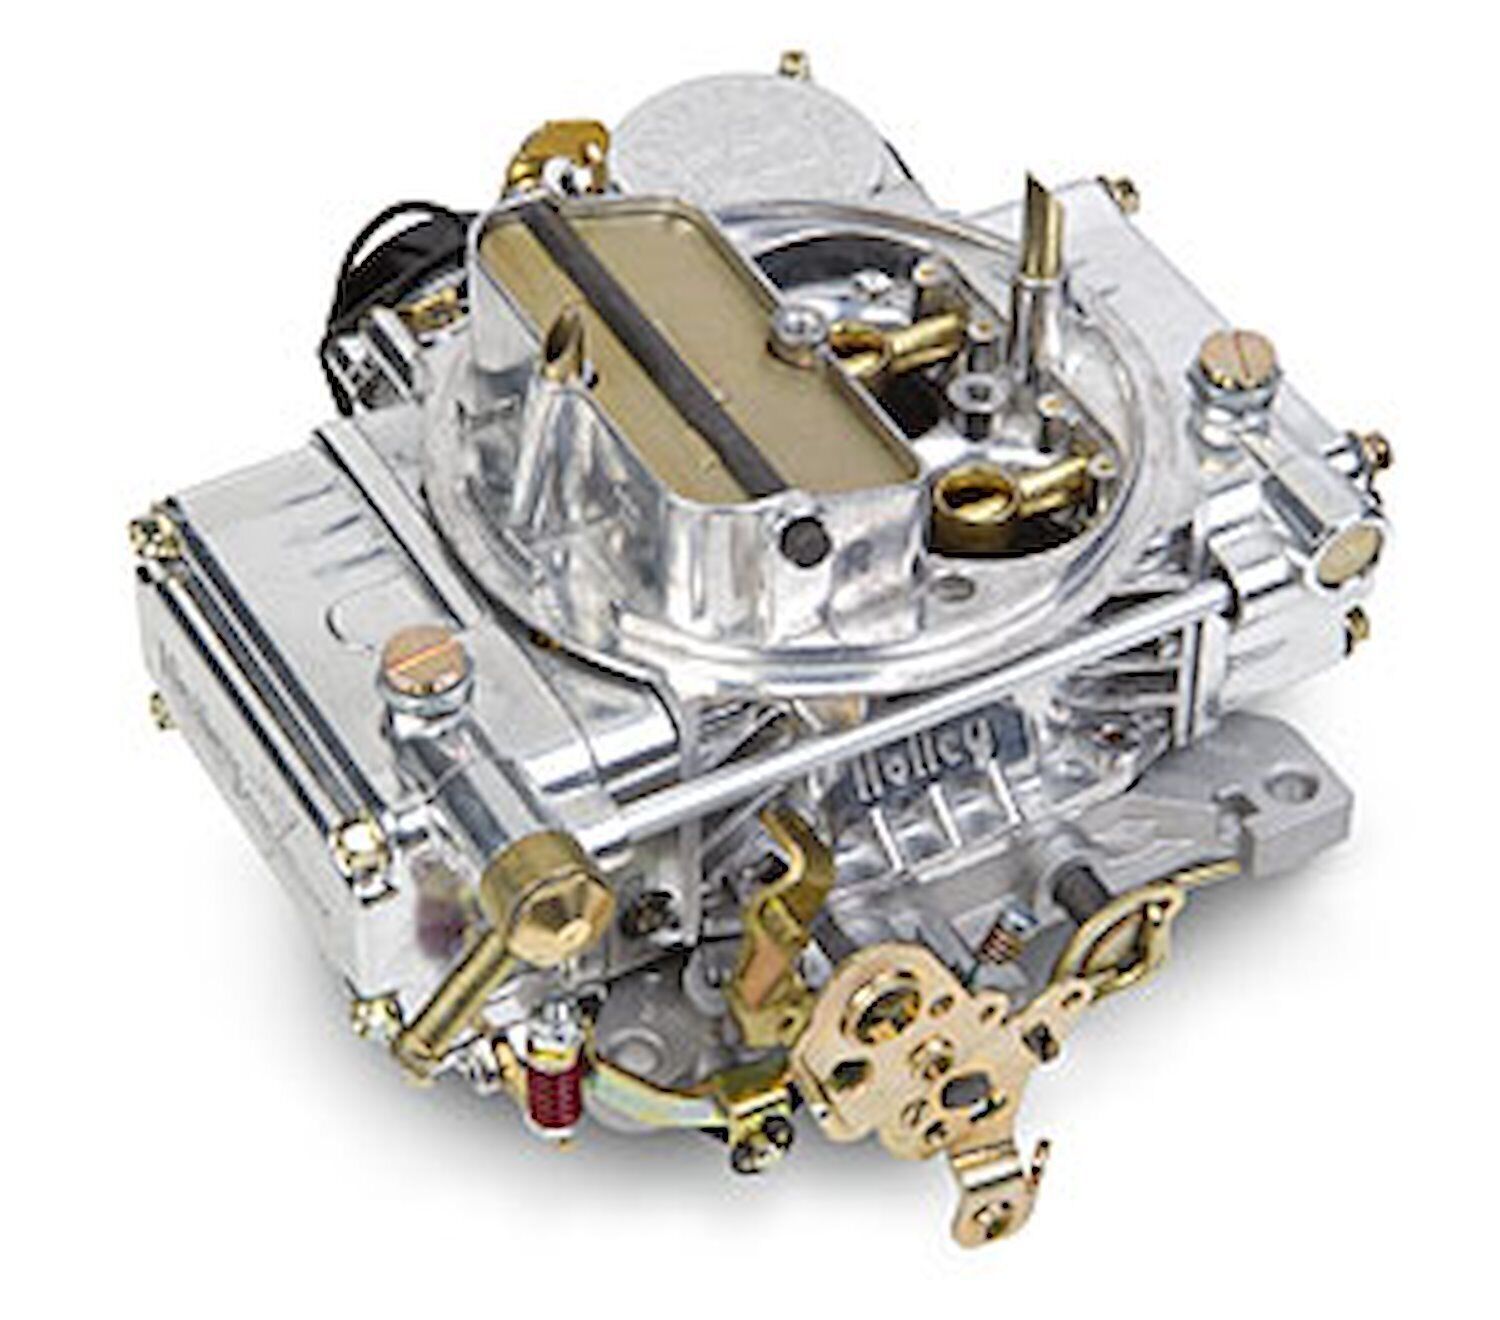 Holley 0-80459SA 750cfm 4-bbl Carburetor